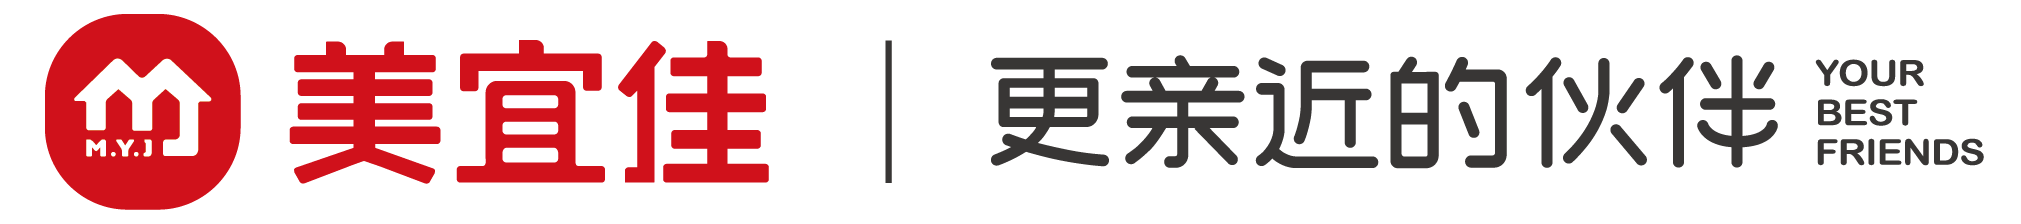 logo带企业口号.png